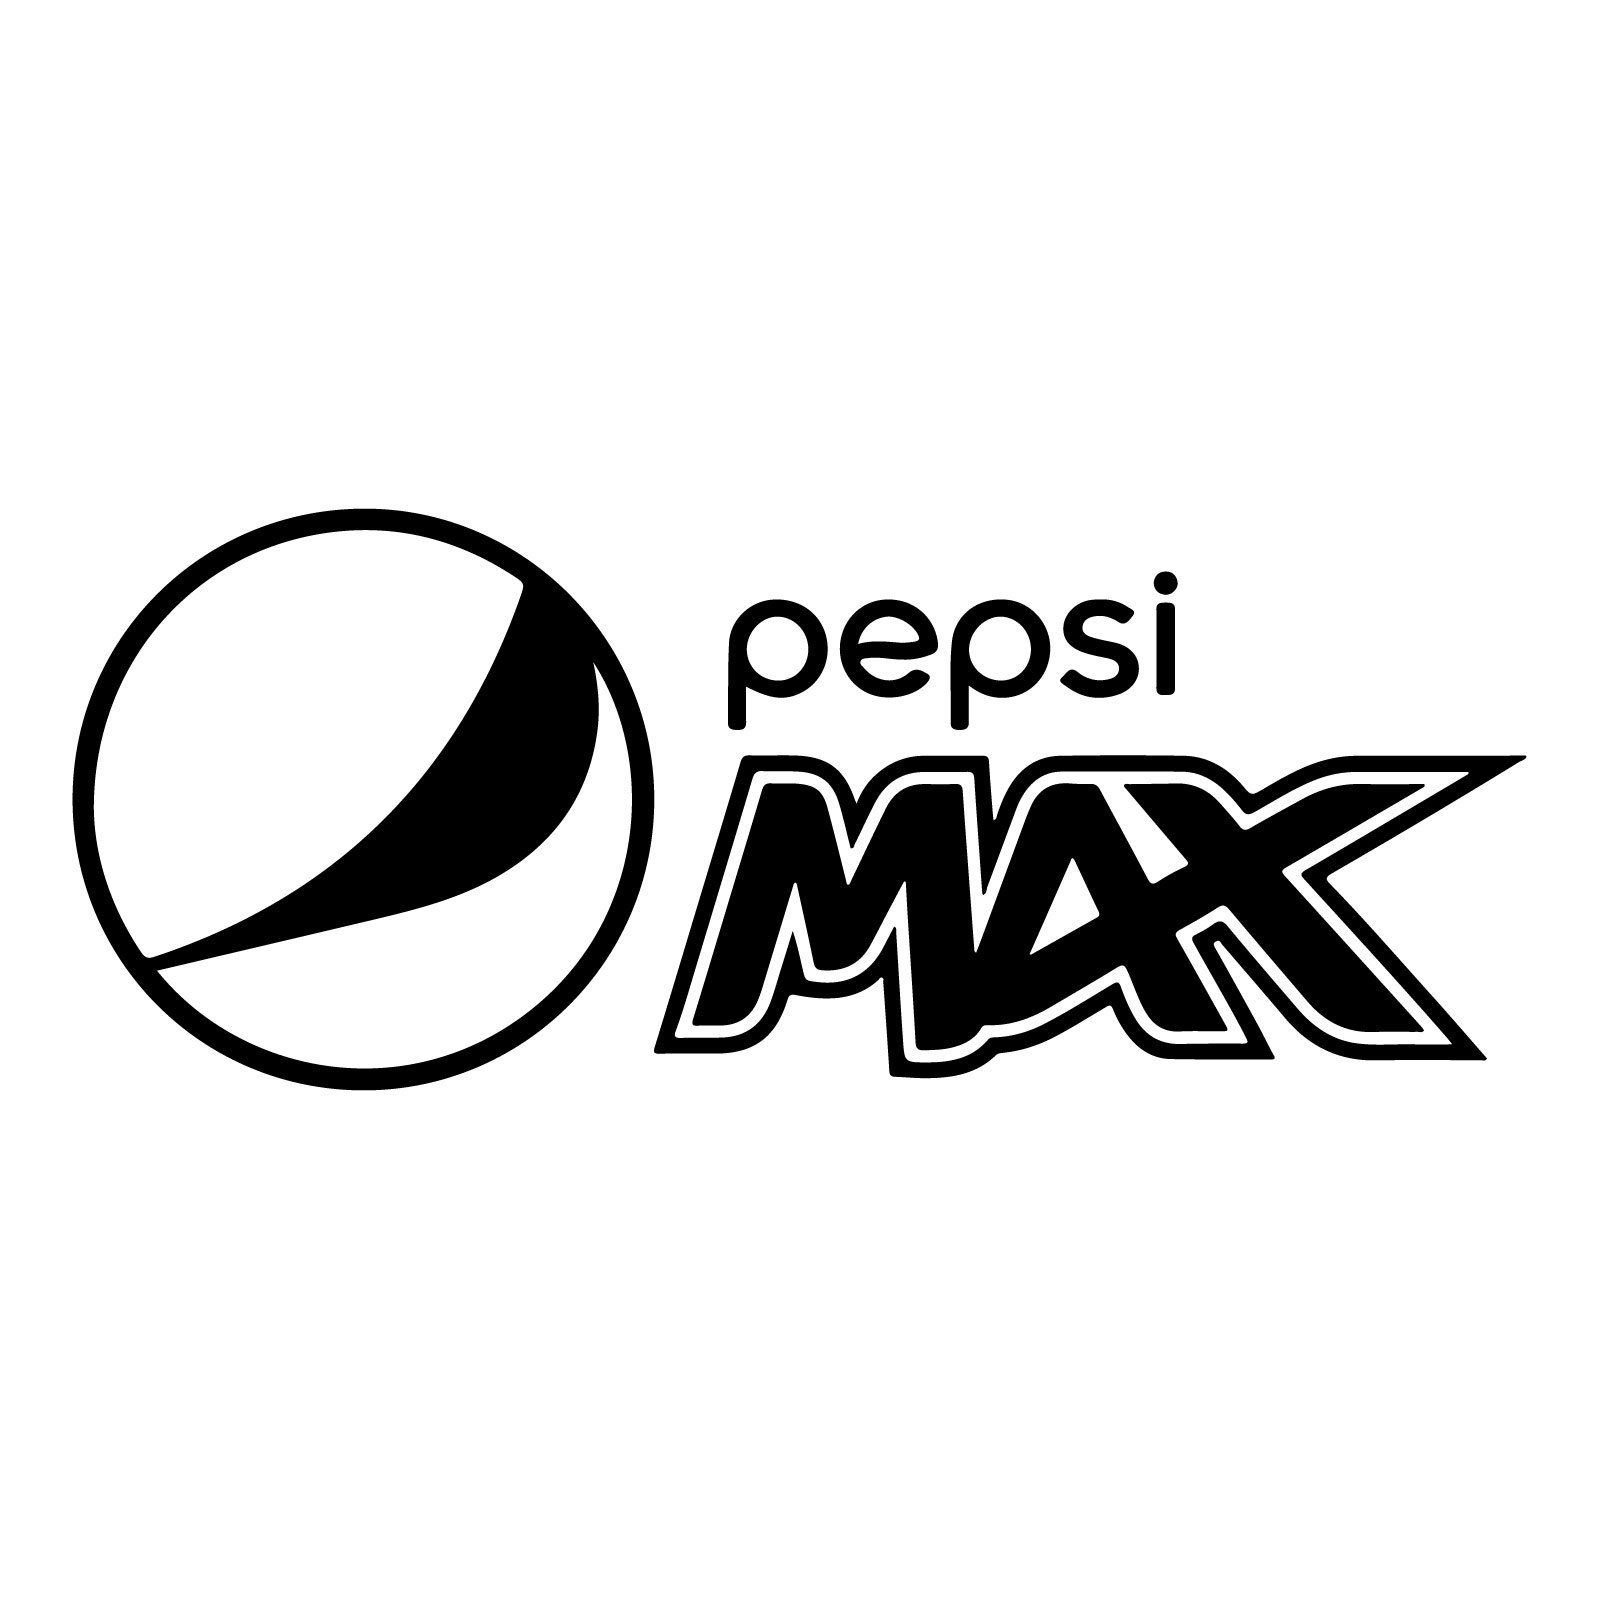 Max logo 2 - Vis alle stickers -